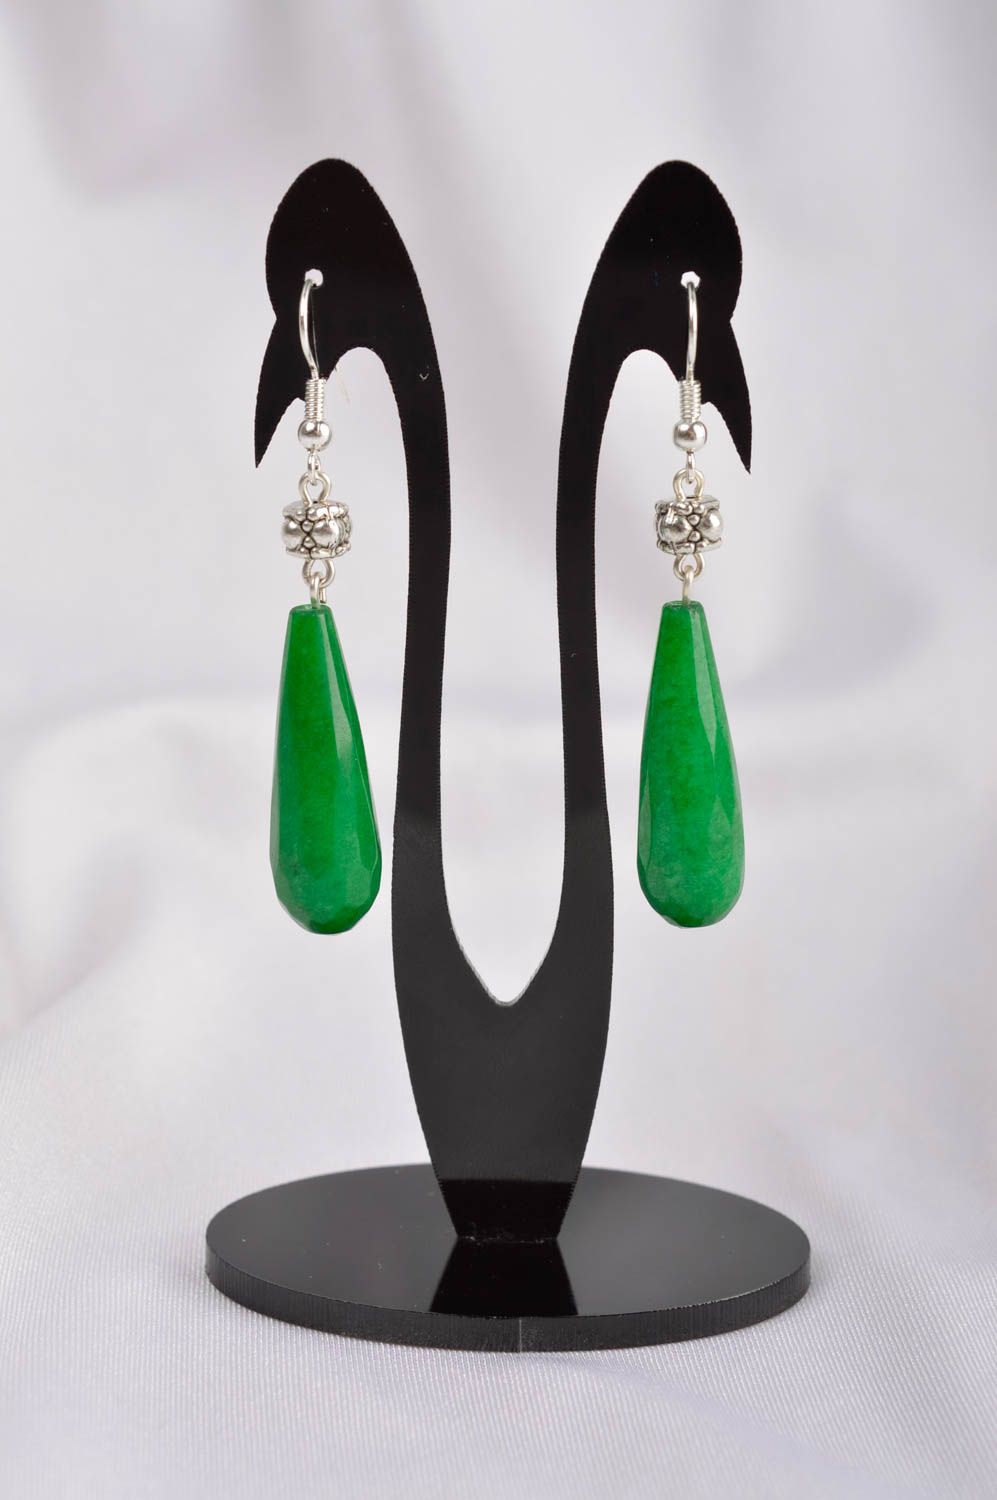 Handmade gemstone earrings bead earrings artisan jewelry designs gifts for her photo 1